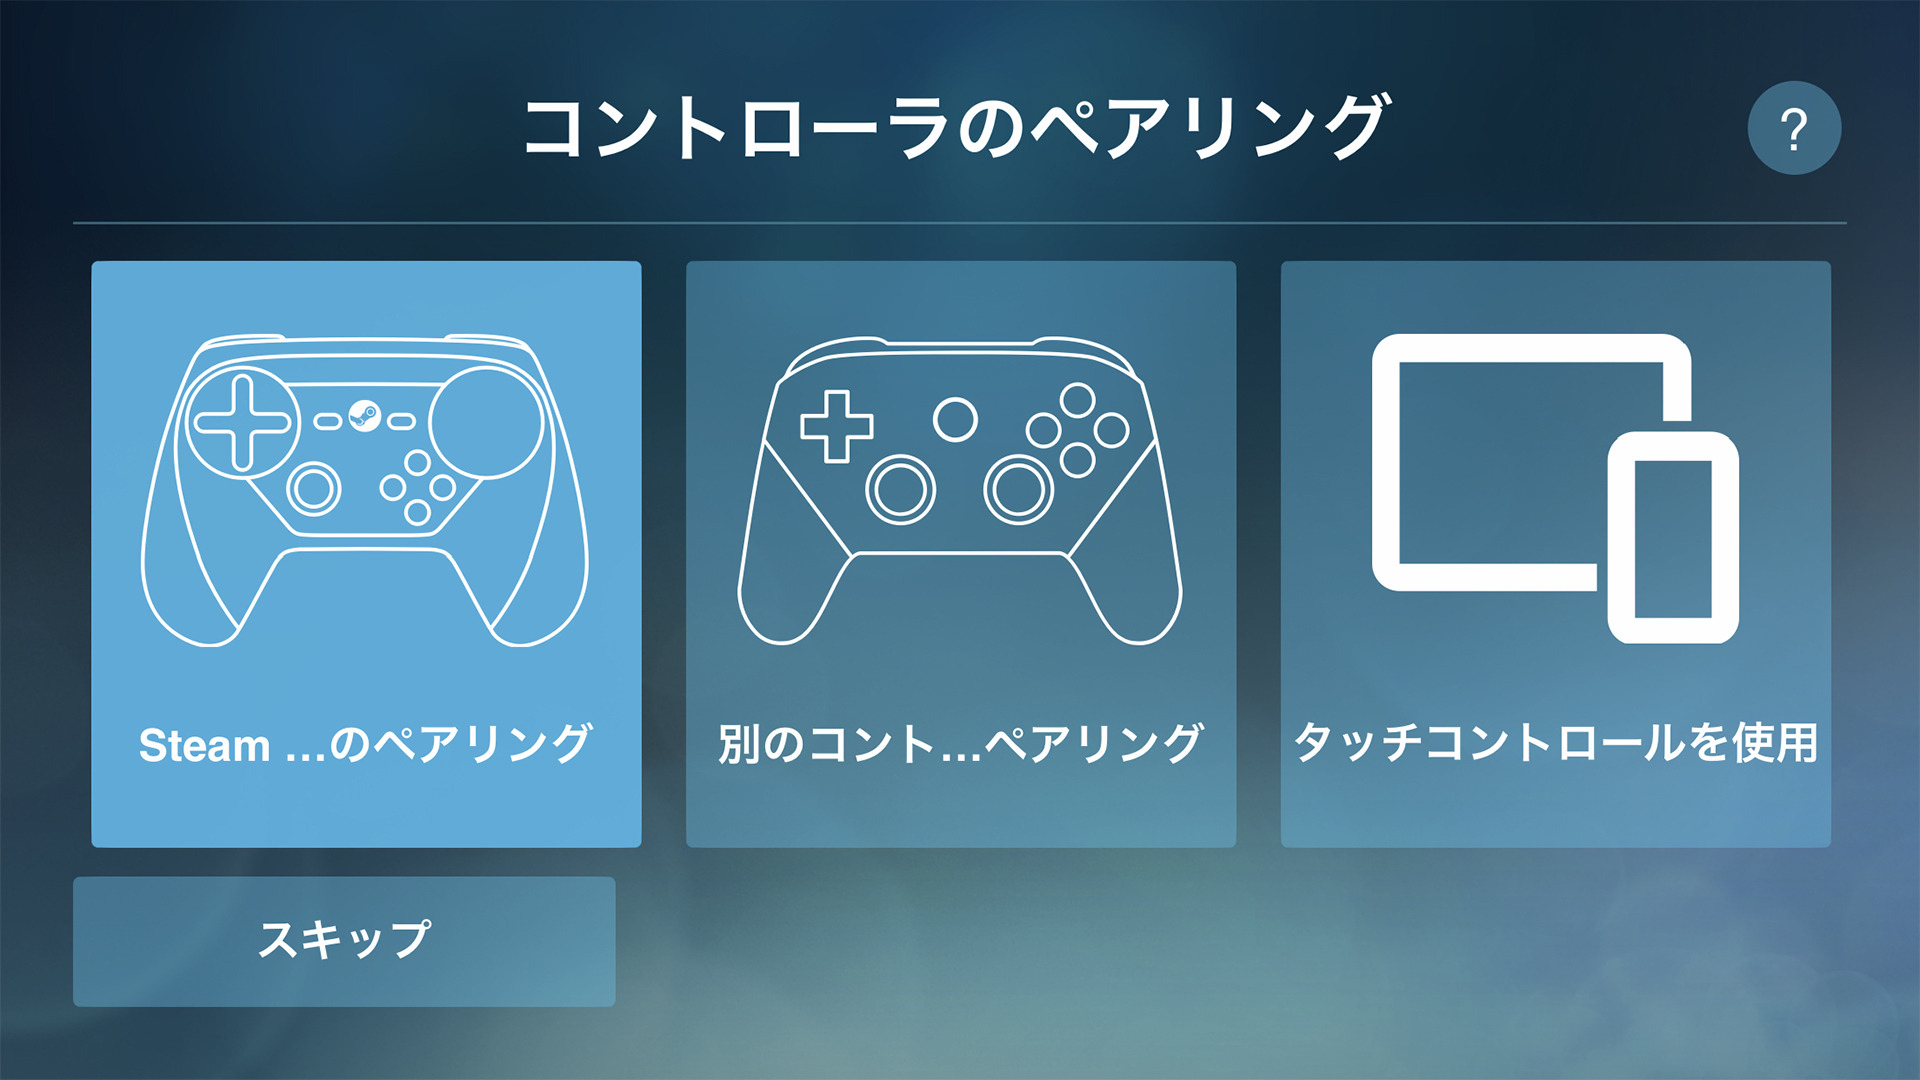 Steamリンク Ios版アプリがついに登場 Iphoneでもリモートでsteamゲームが楽しめる Game Spark 国内 海外ゲーム情報サイト